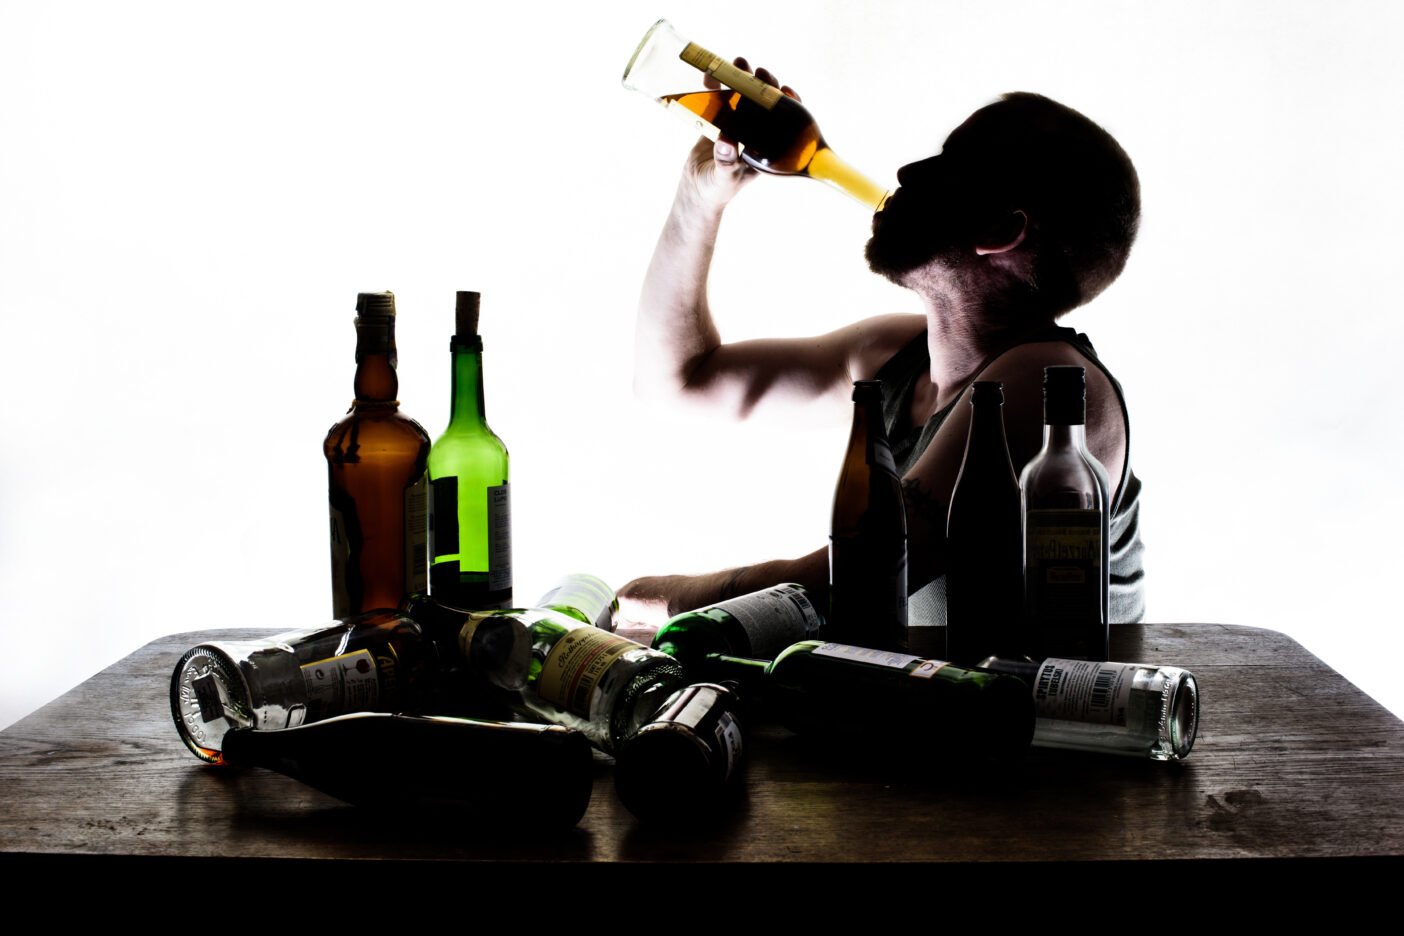 Картинка пьющий человек. Алкоголь и человек. Алкоголизм картинки. Пьющий человек.